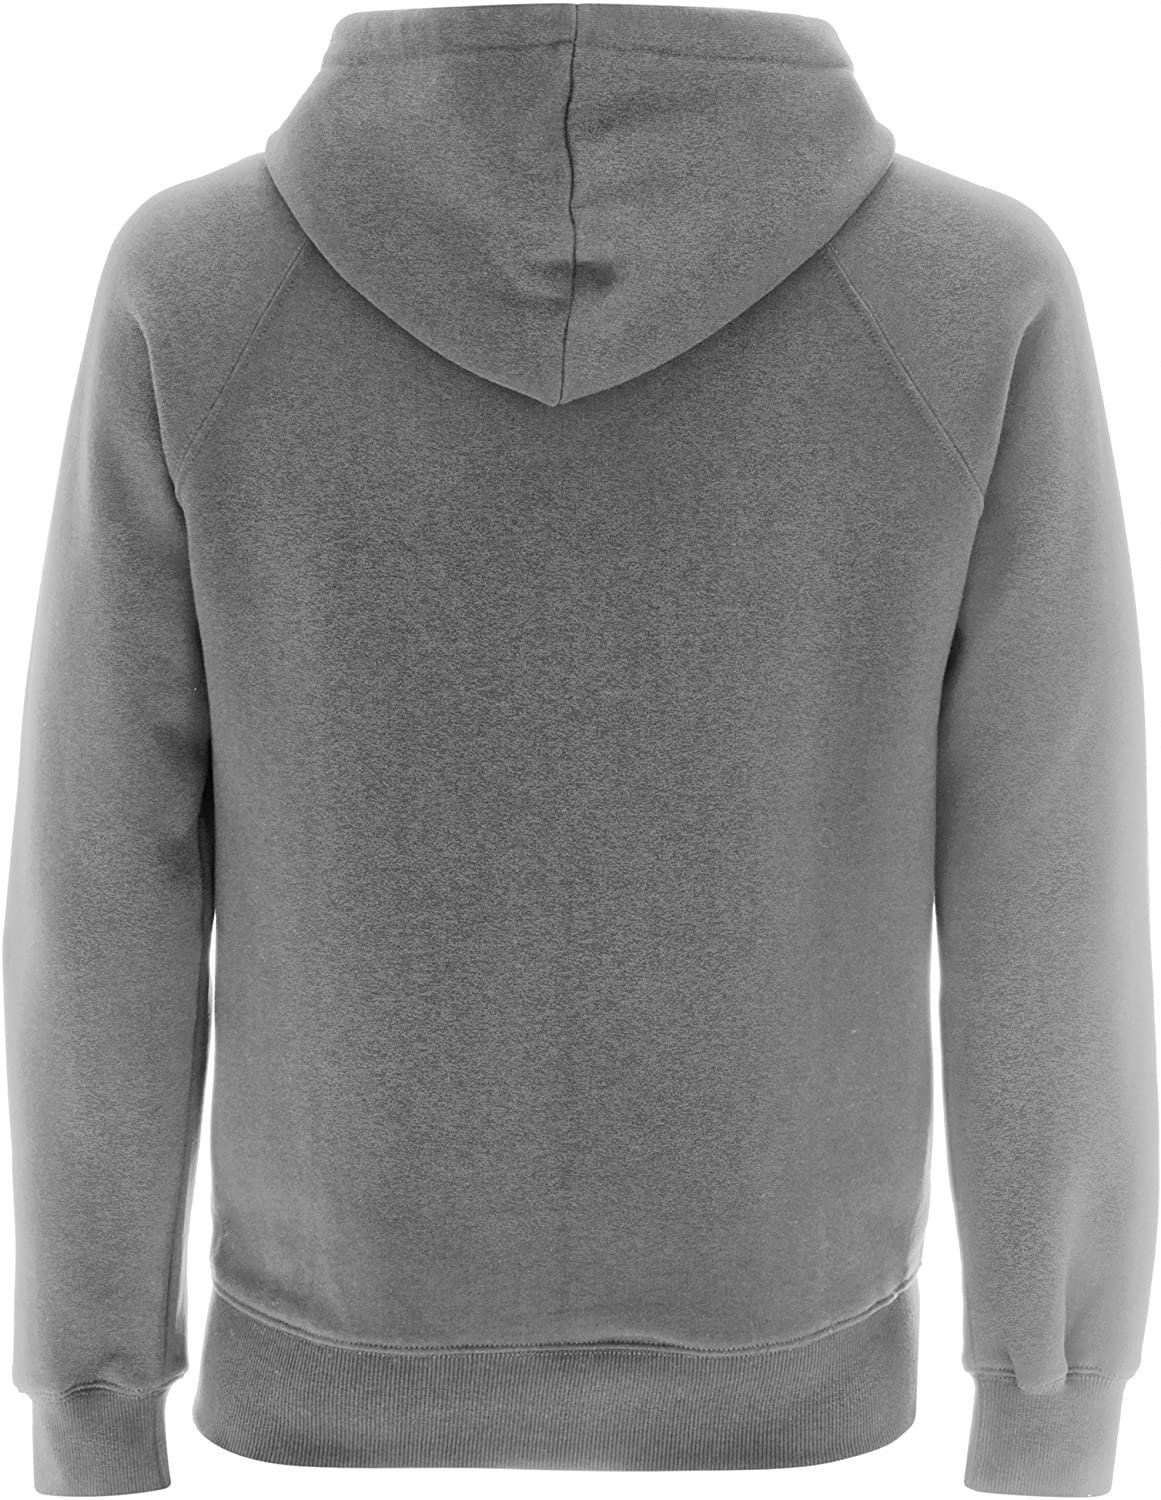 Mens Hooded Pull On Sweatshirt Underhood of London Pullover Hoodie for Men Cotton Fleece Jacket